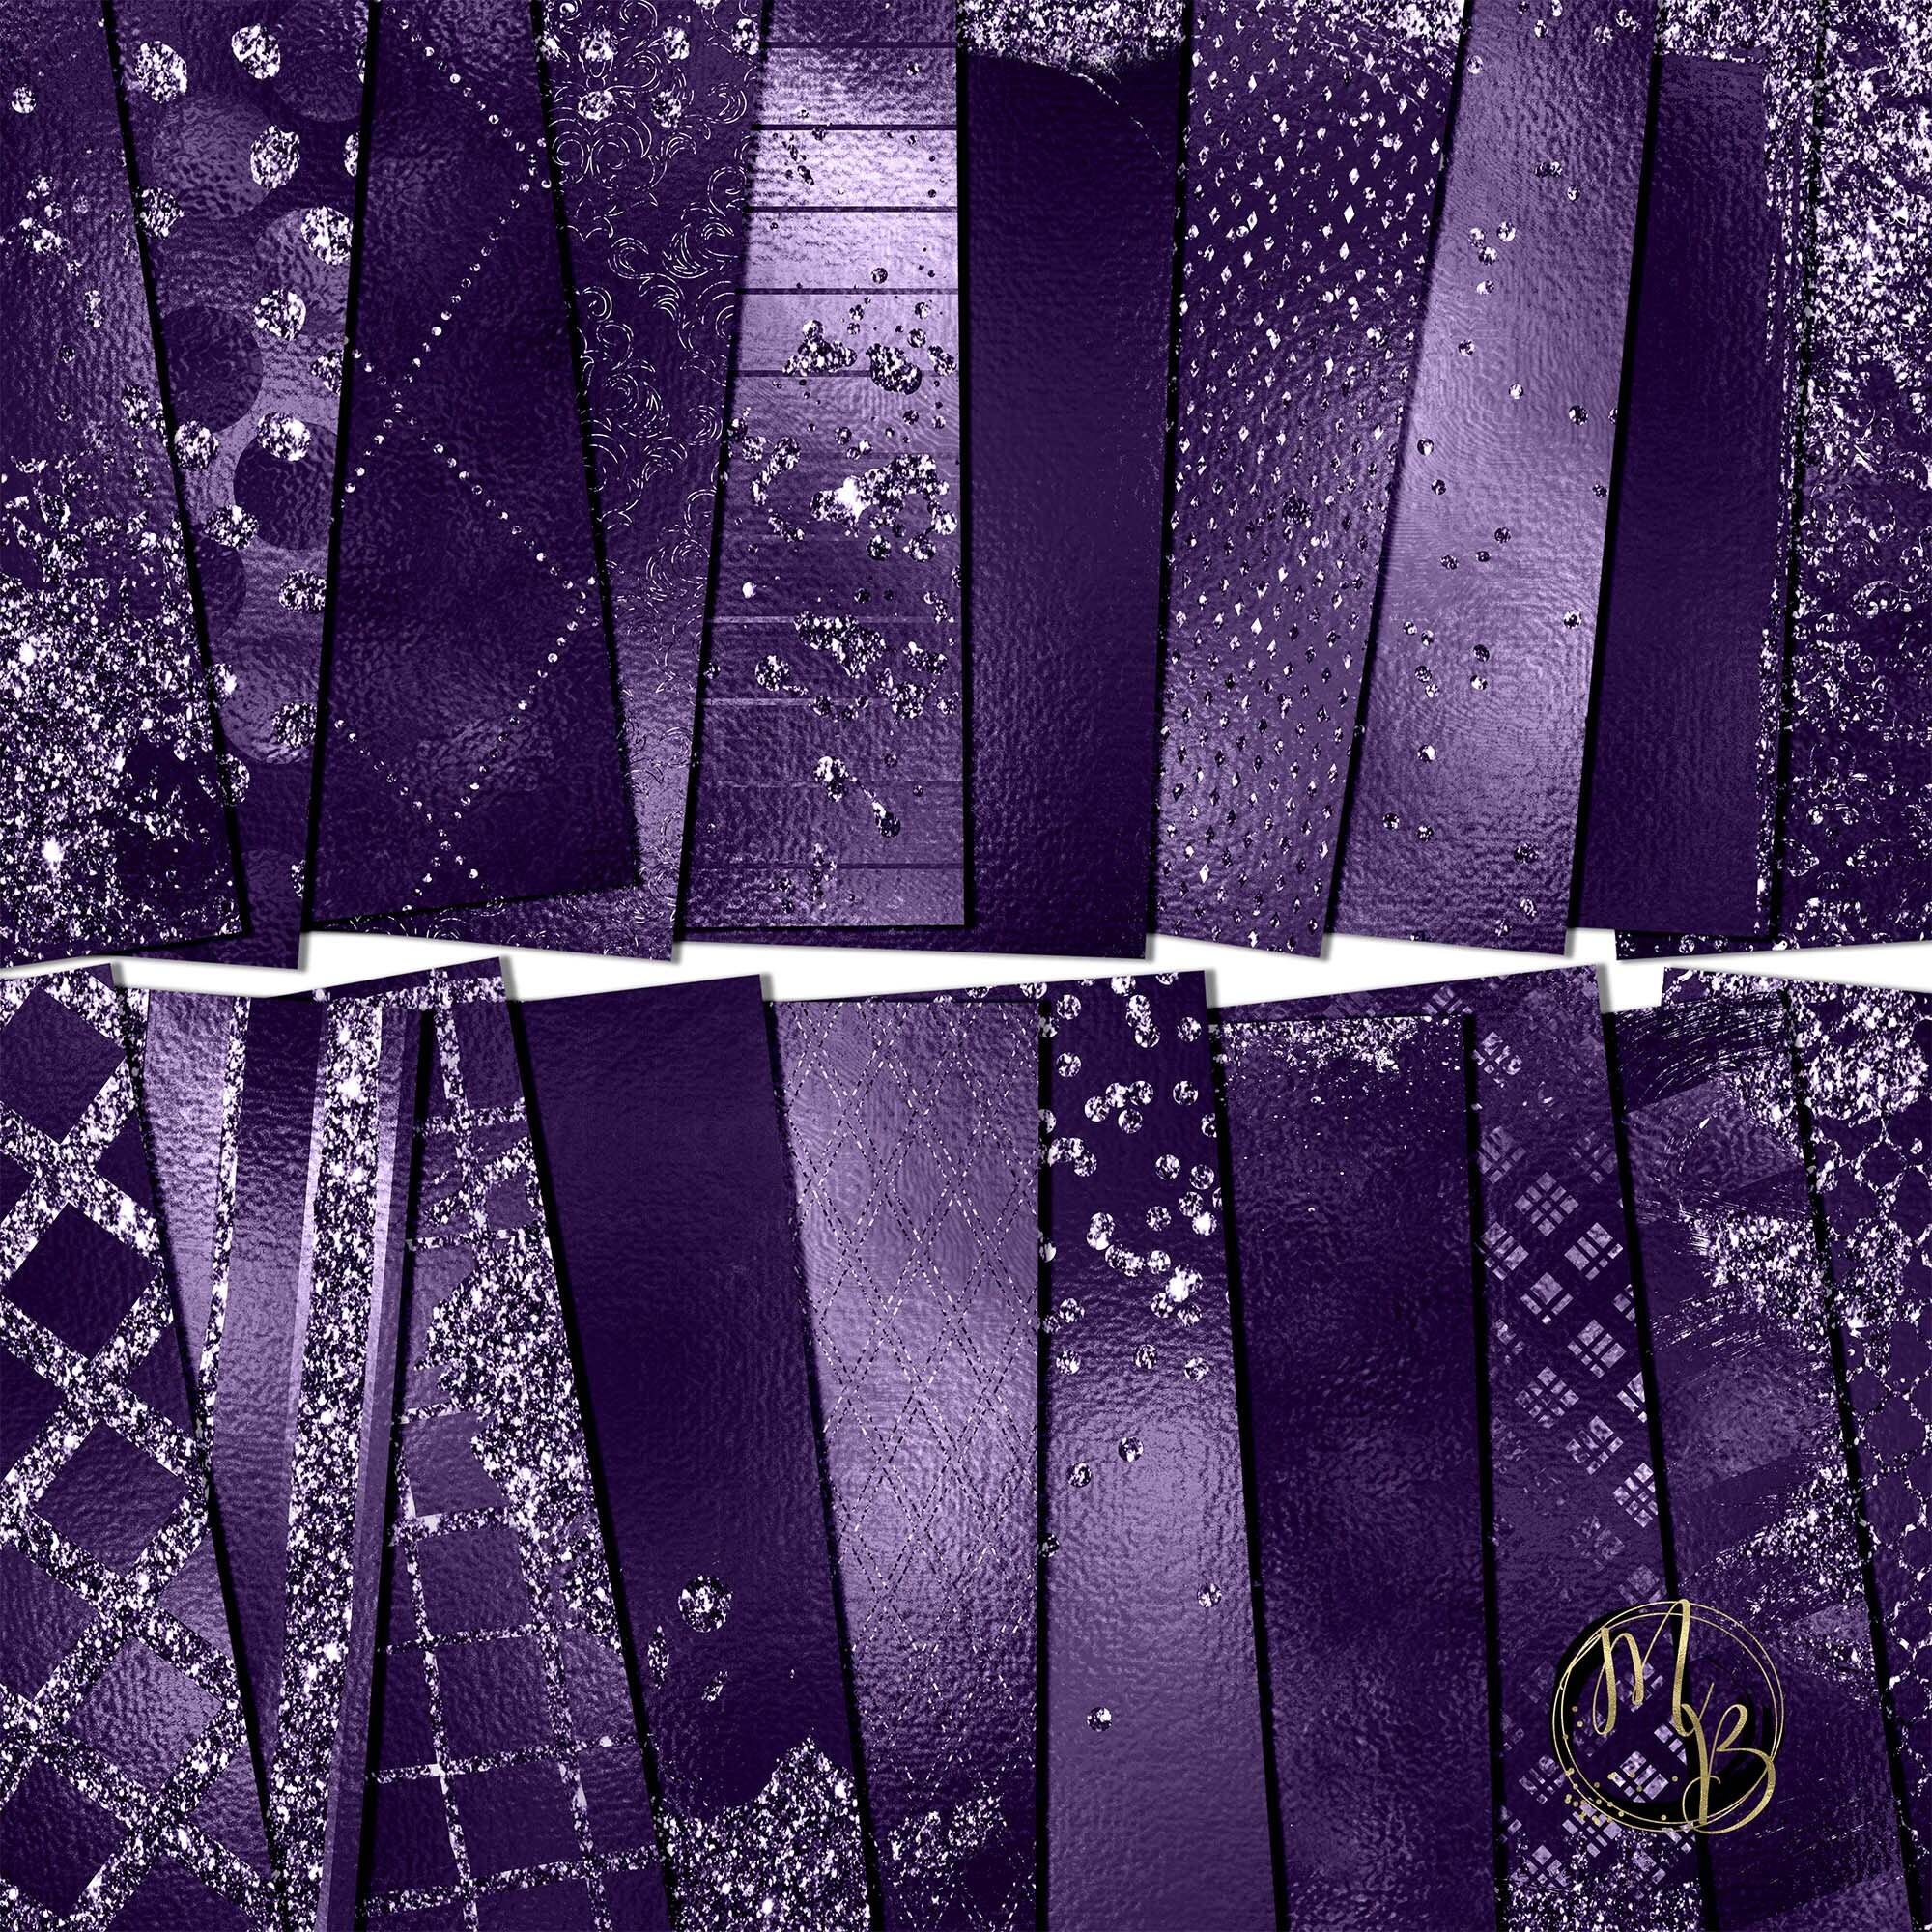 girly Sassy Dark Purple and Silver Digital Paper Download scrapbook paper digital background 20 12x12 JPG glitter foil textures diamonds